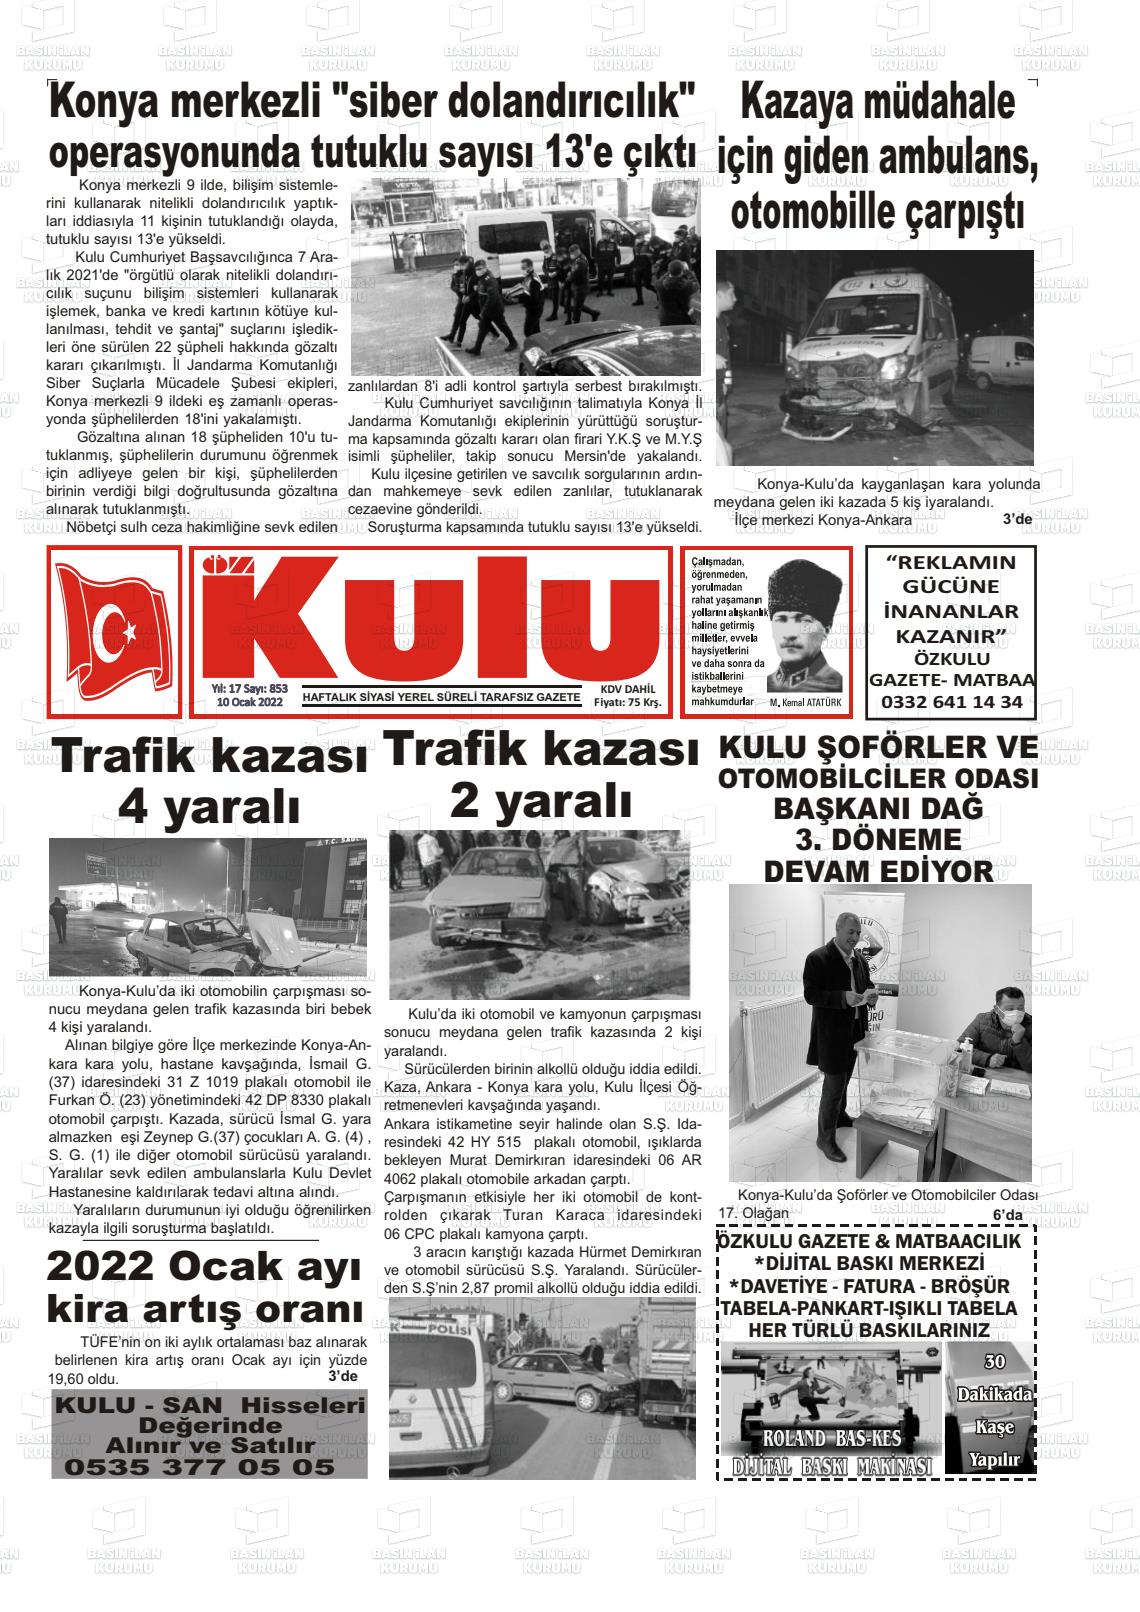 10 Ocak 2022 Öz Kulu Gazete Manşeti